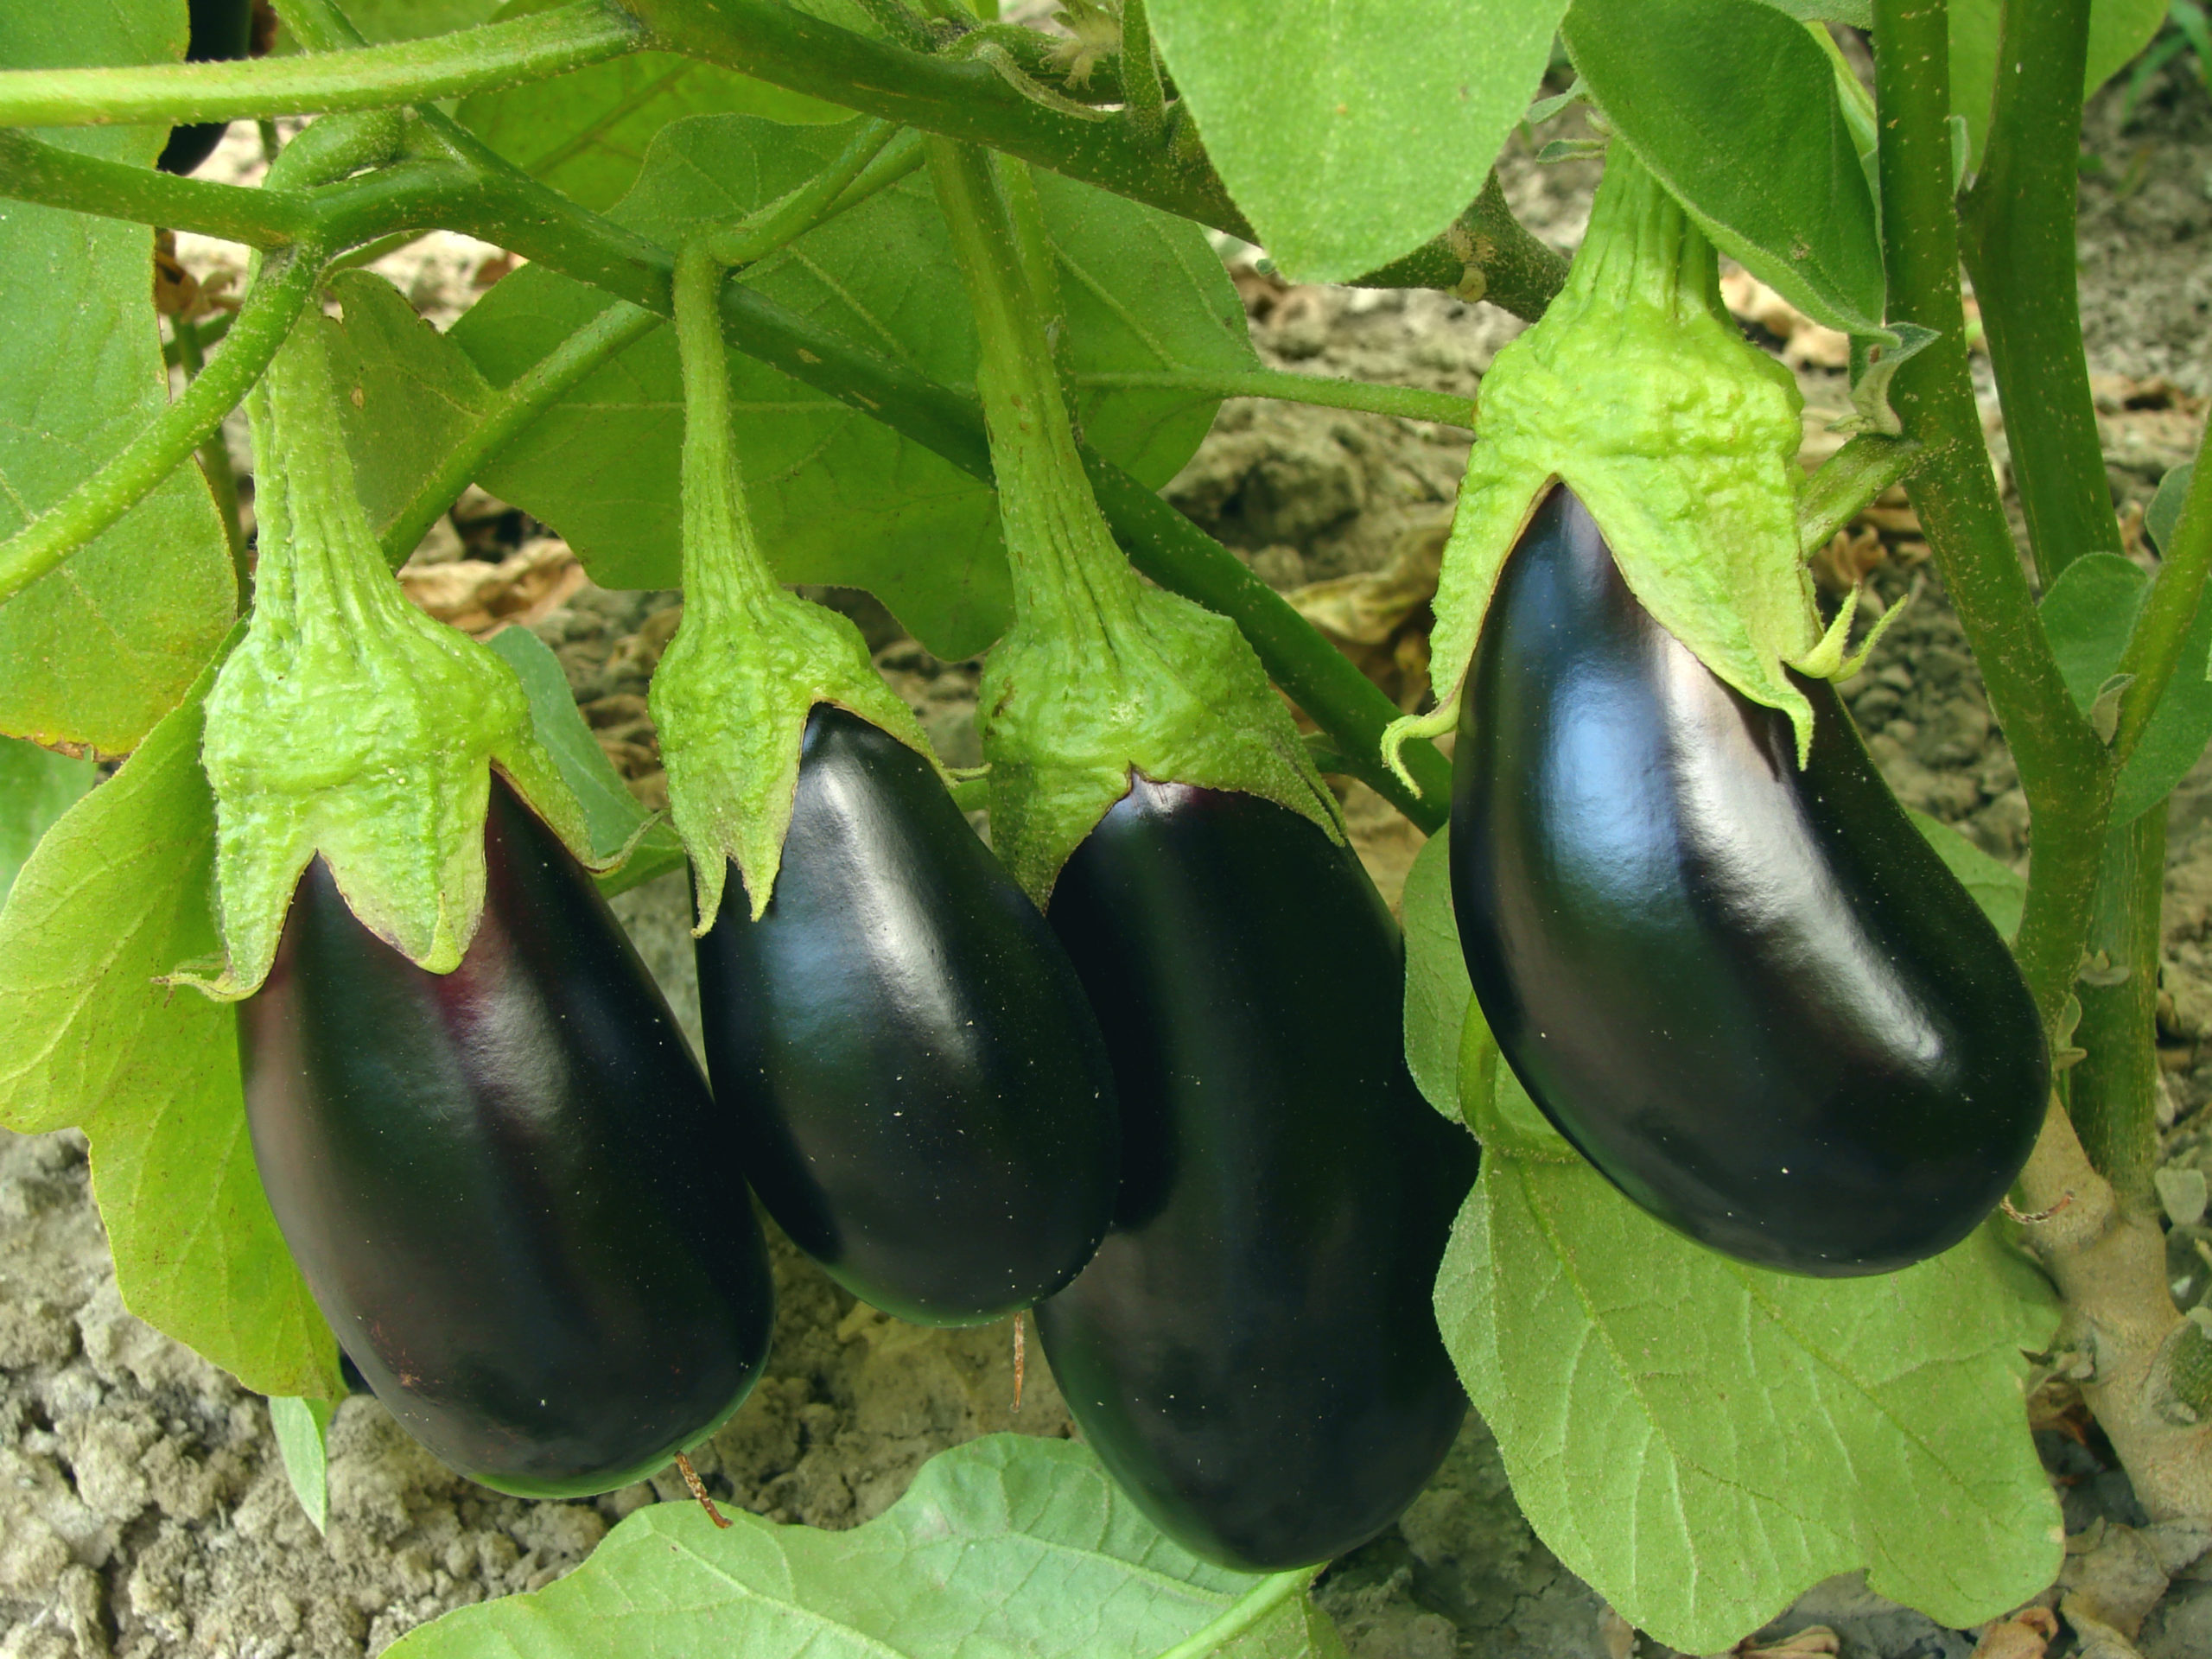 eggplant fruits growing in the garden